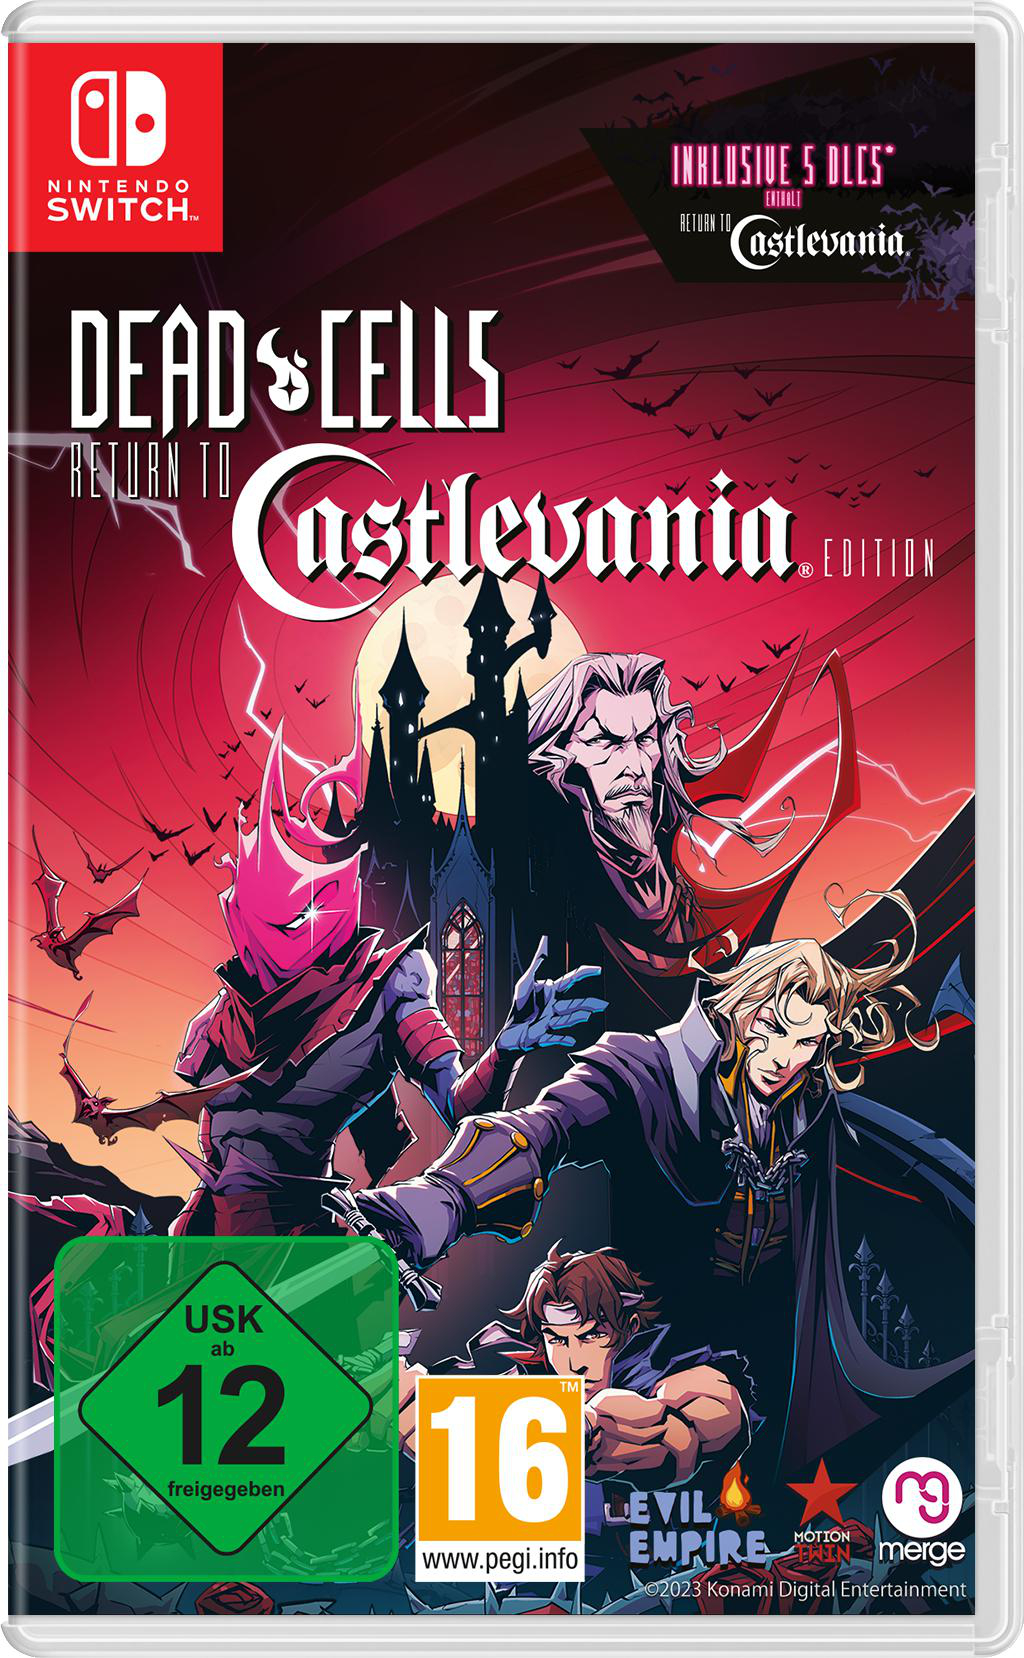 Dead Cells Return to Switch] - Castlevania [Nintendo